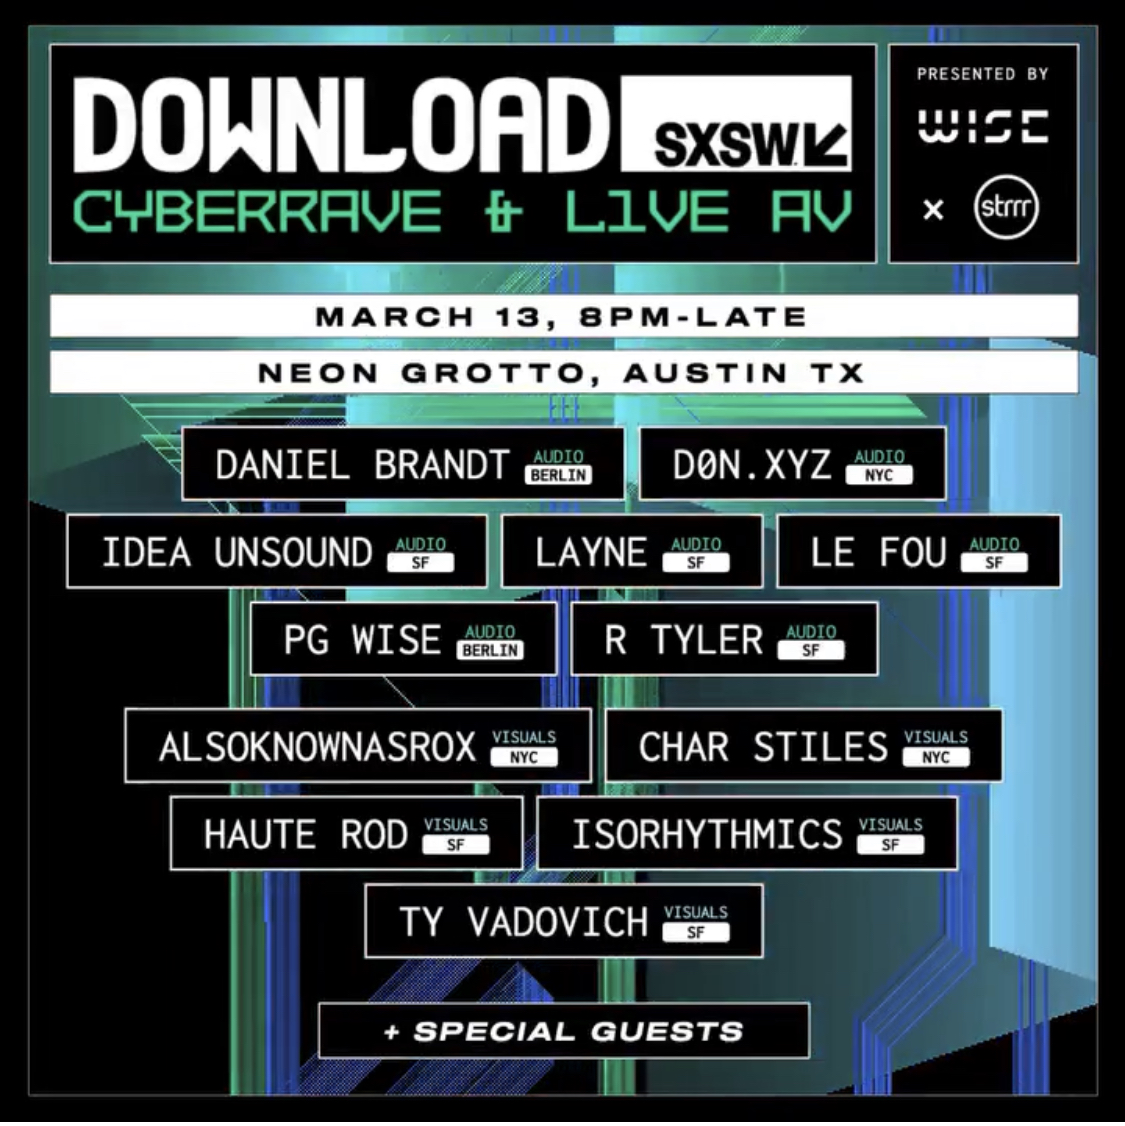 SXSW presents: Download Cyberrave & Live A/V